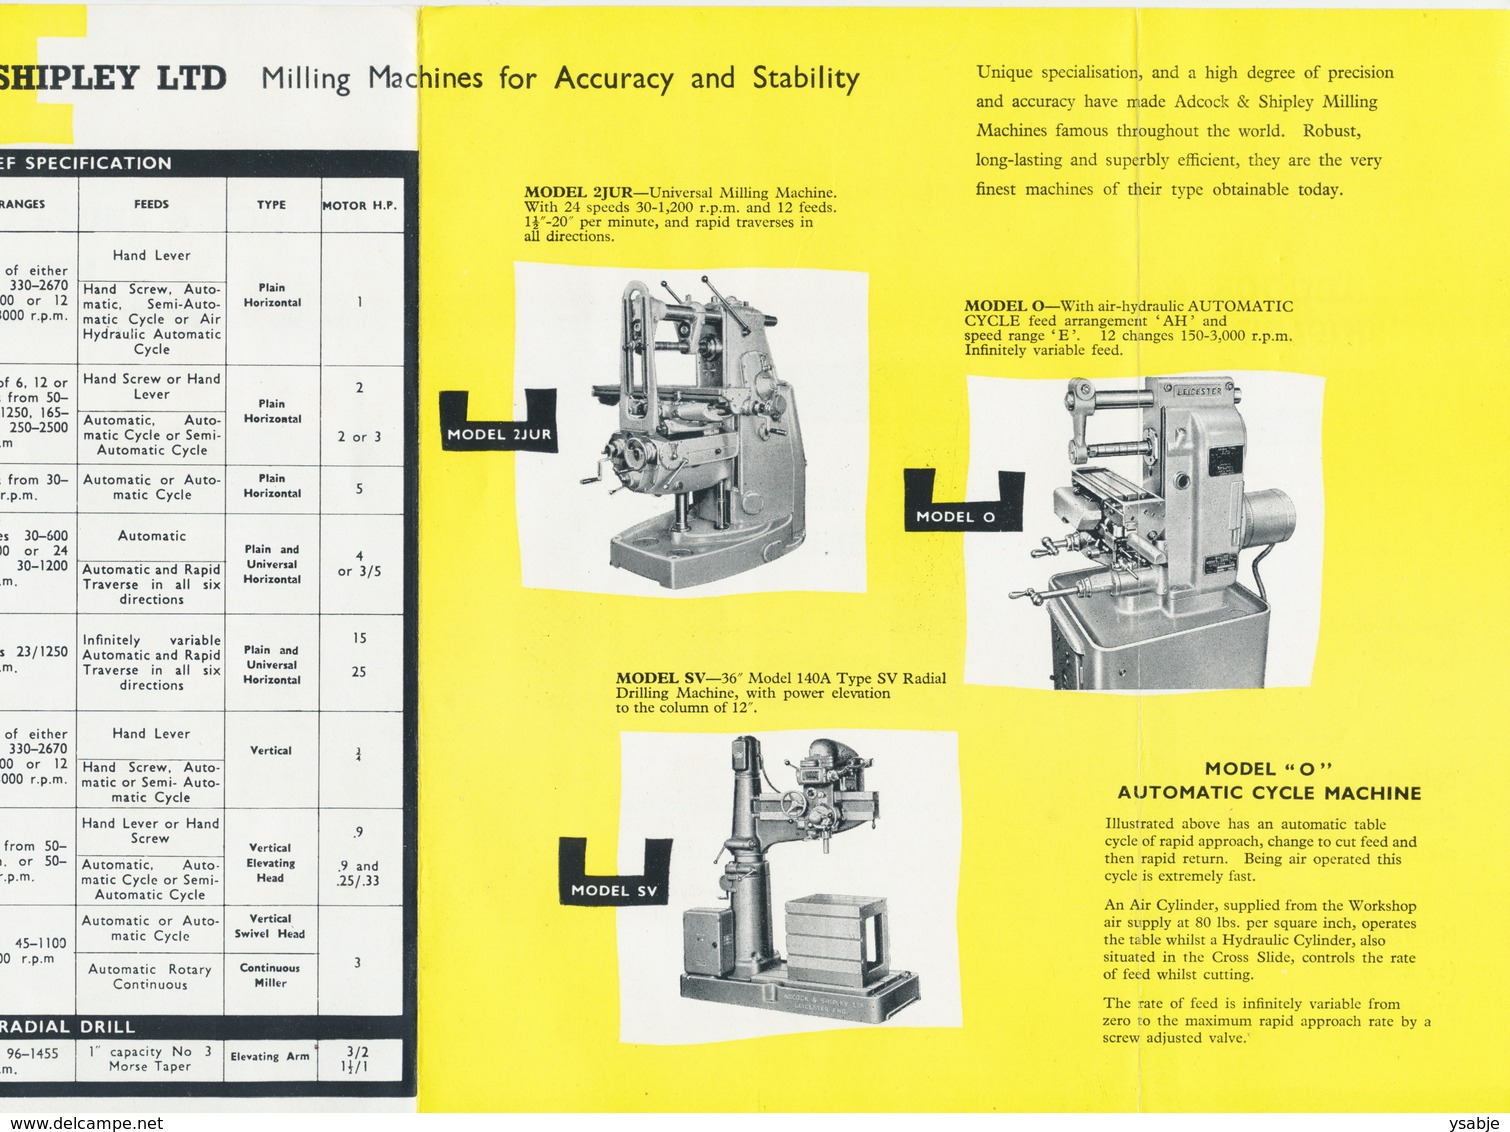 Adcock & Shipley Ltd - Milling Machines - Reclamefolder - Other Apparatus